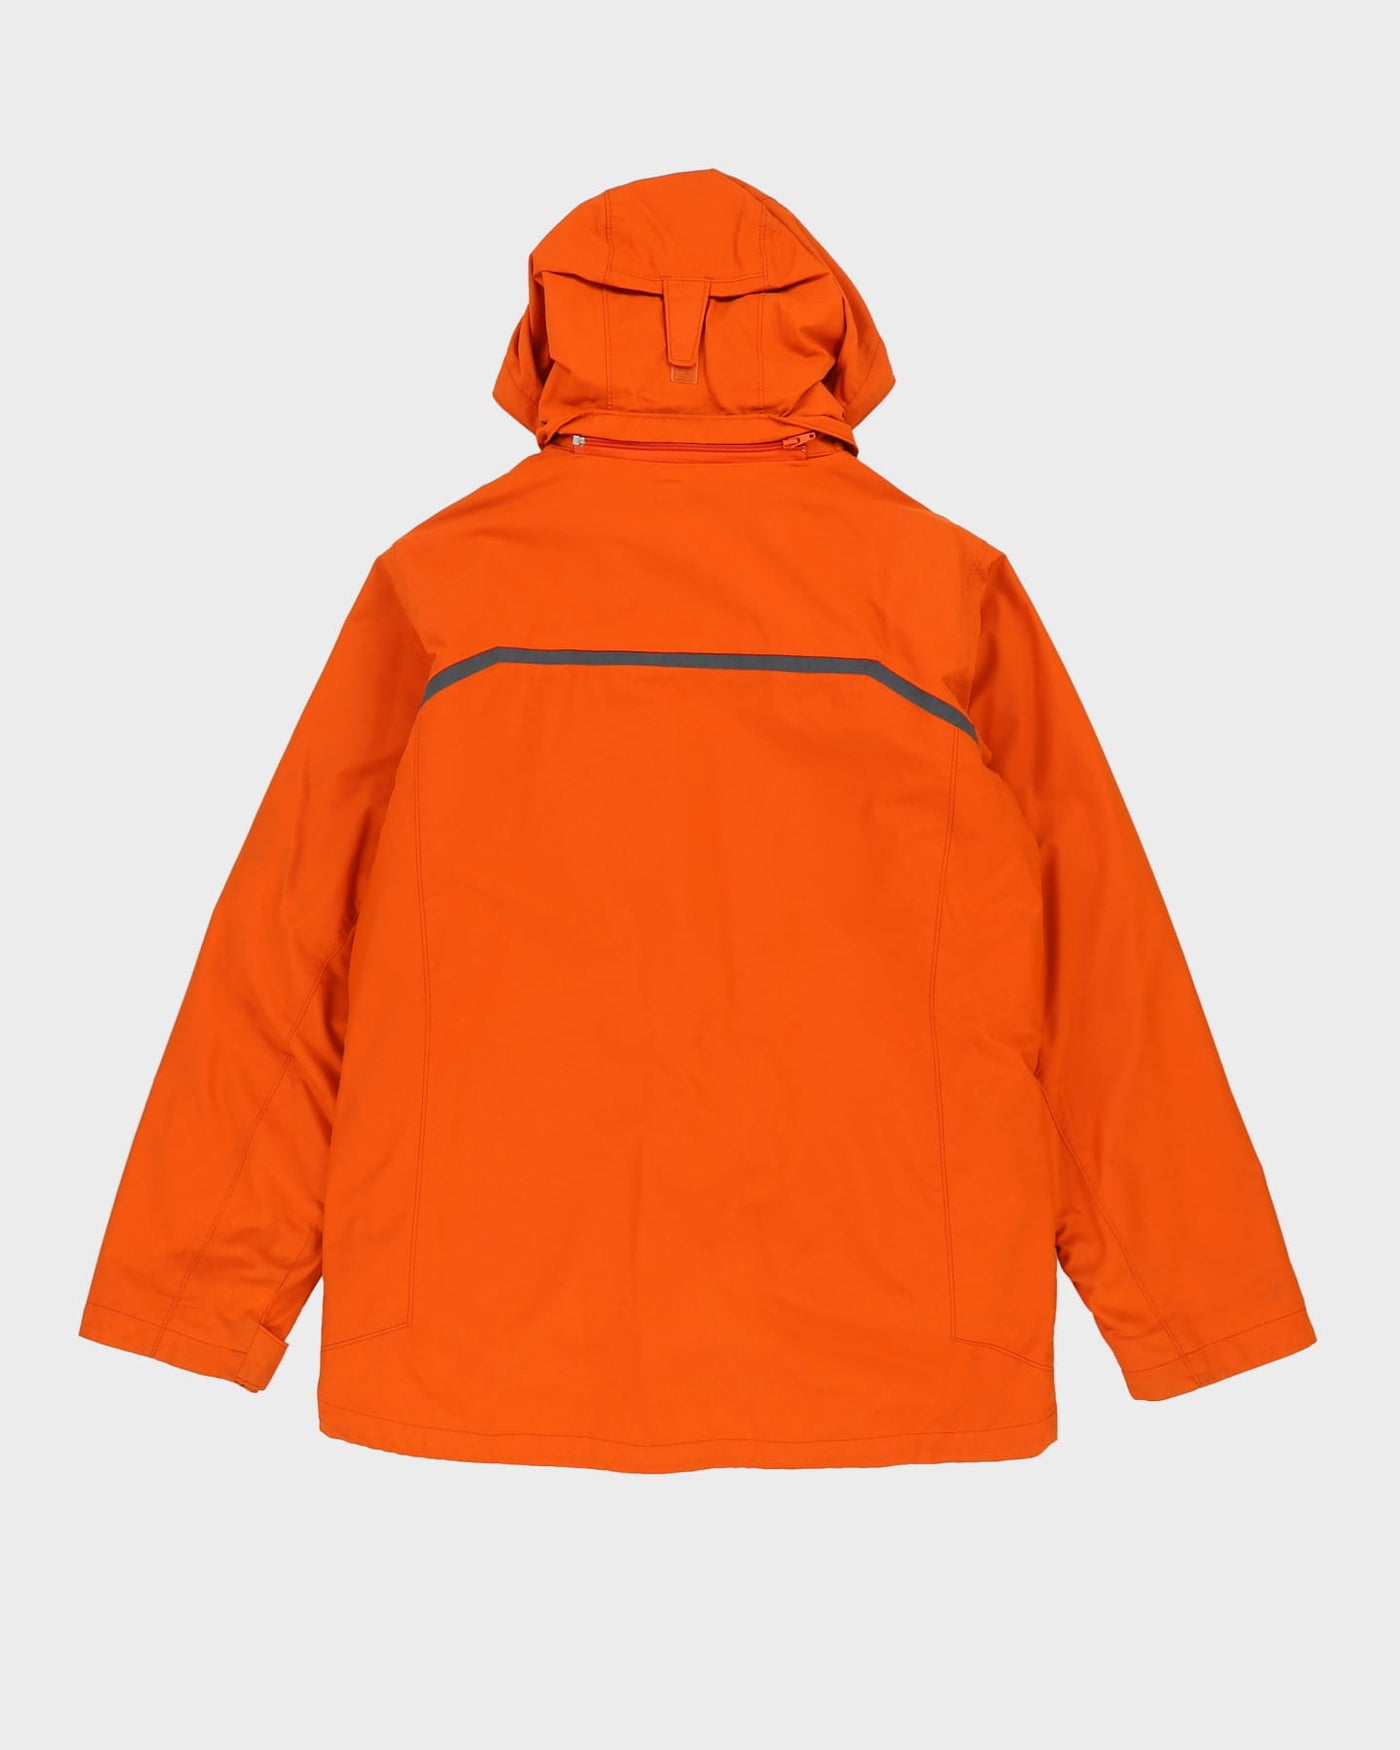 Columbia Orange Hooded Thinsulate Anorak Jacket - M